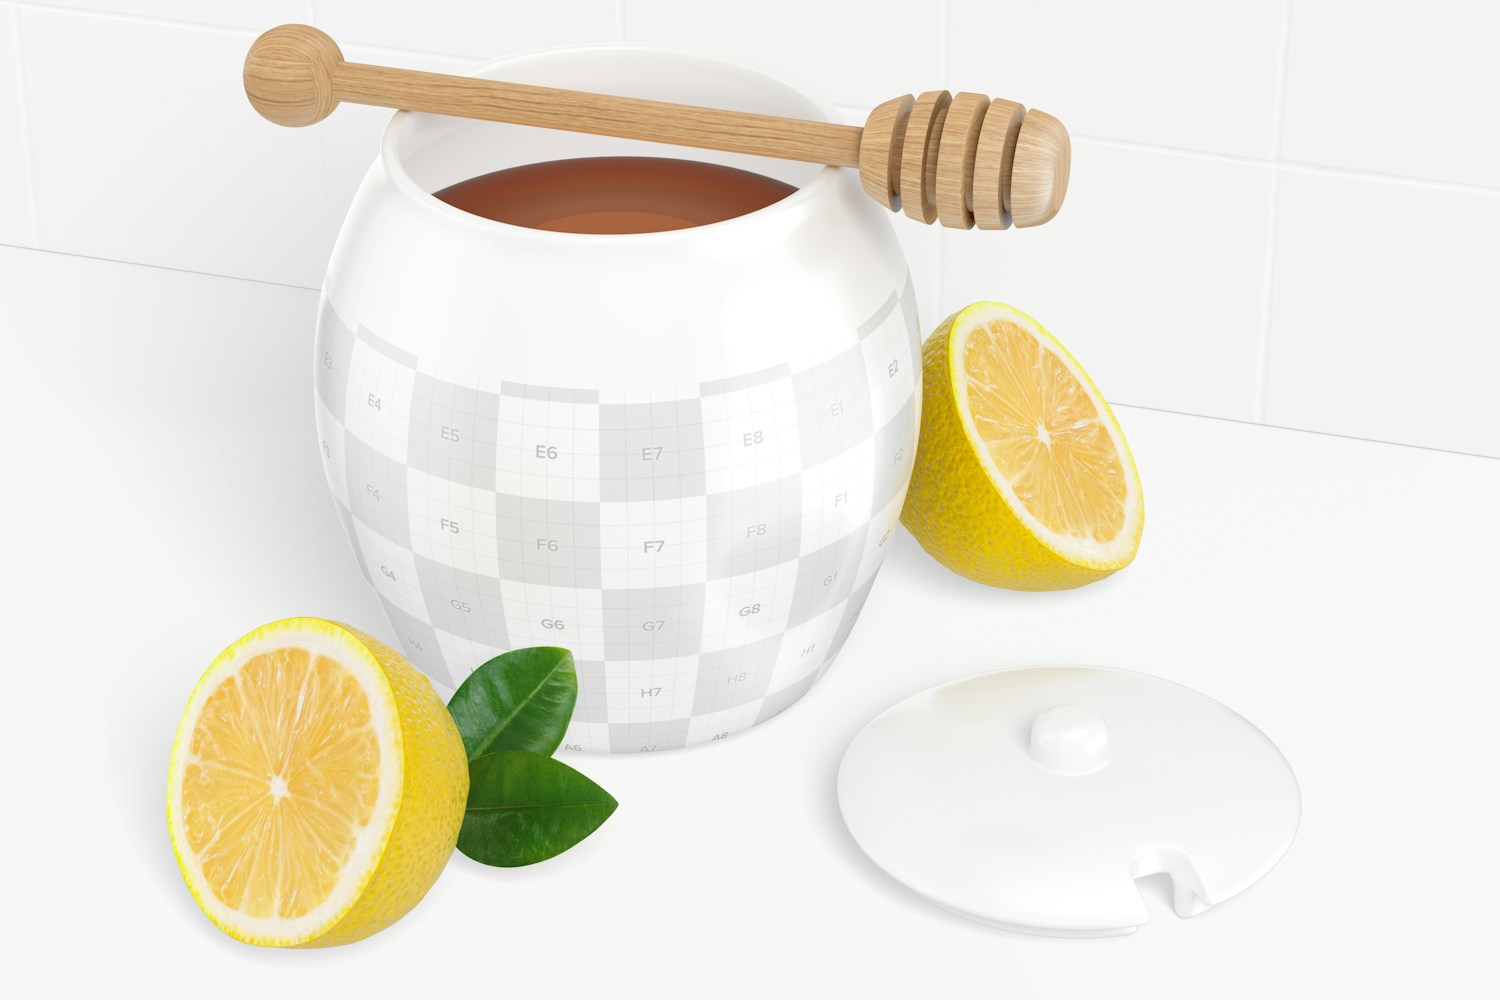 Ceramic Honey Pot with Lemons Mockup